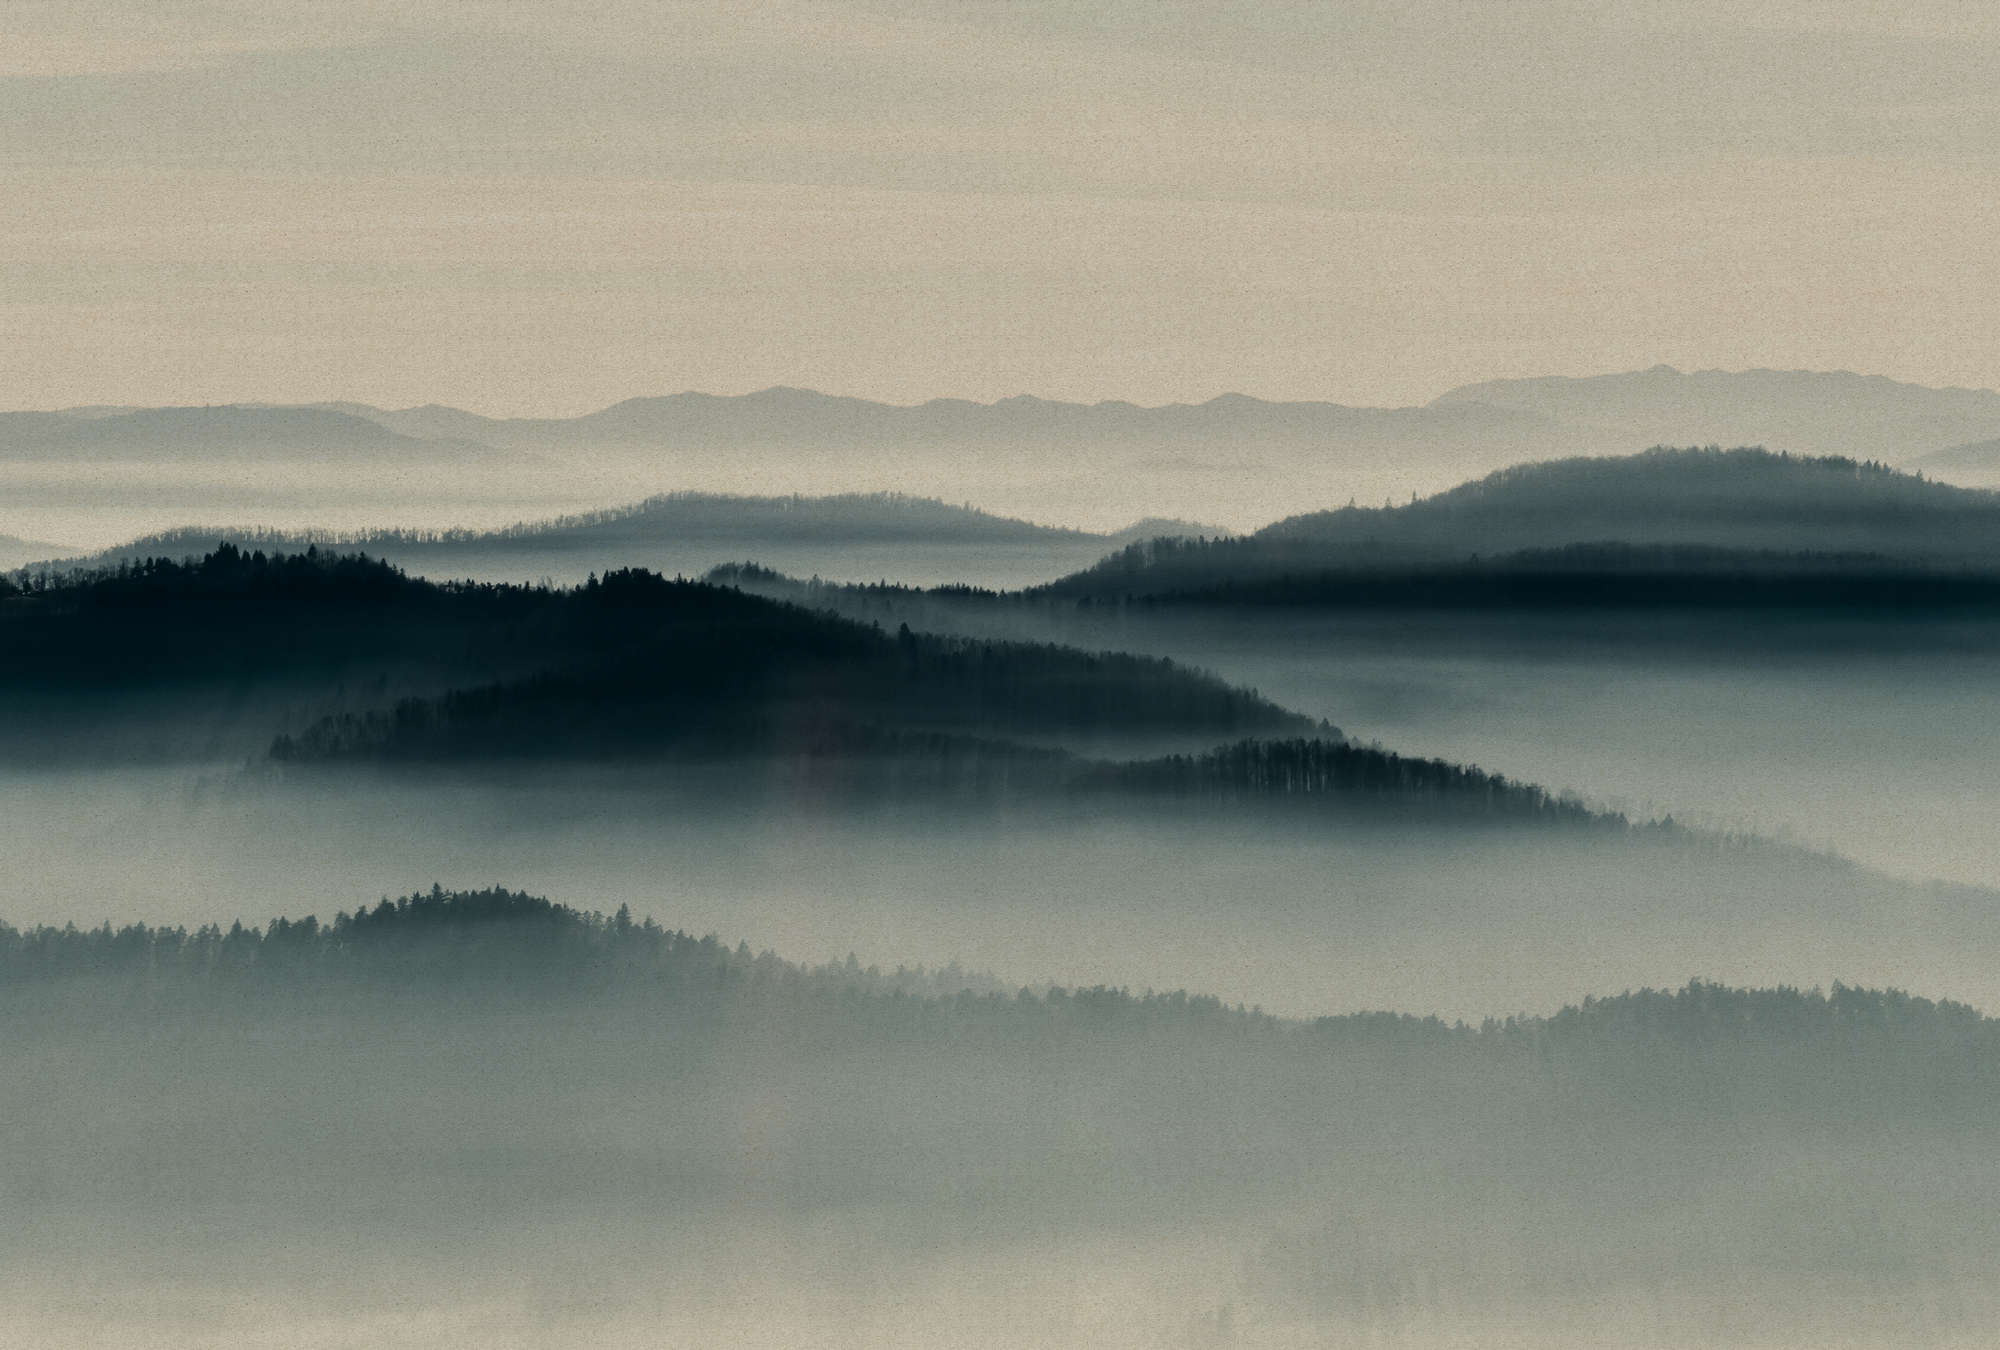             Horizon 1 - Carta da parati paesaggio nebbia, linea cielo natura con texture cartone - Beige, Blu | Panno liscio opaco
        